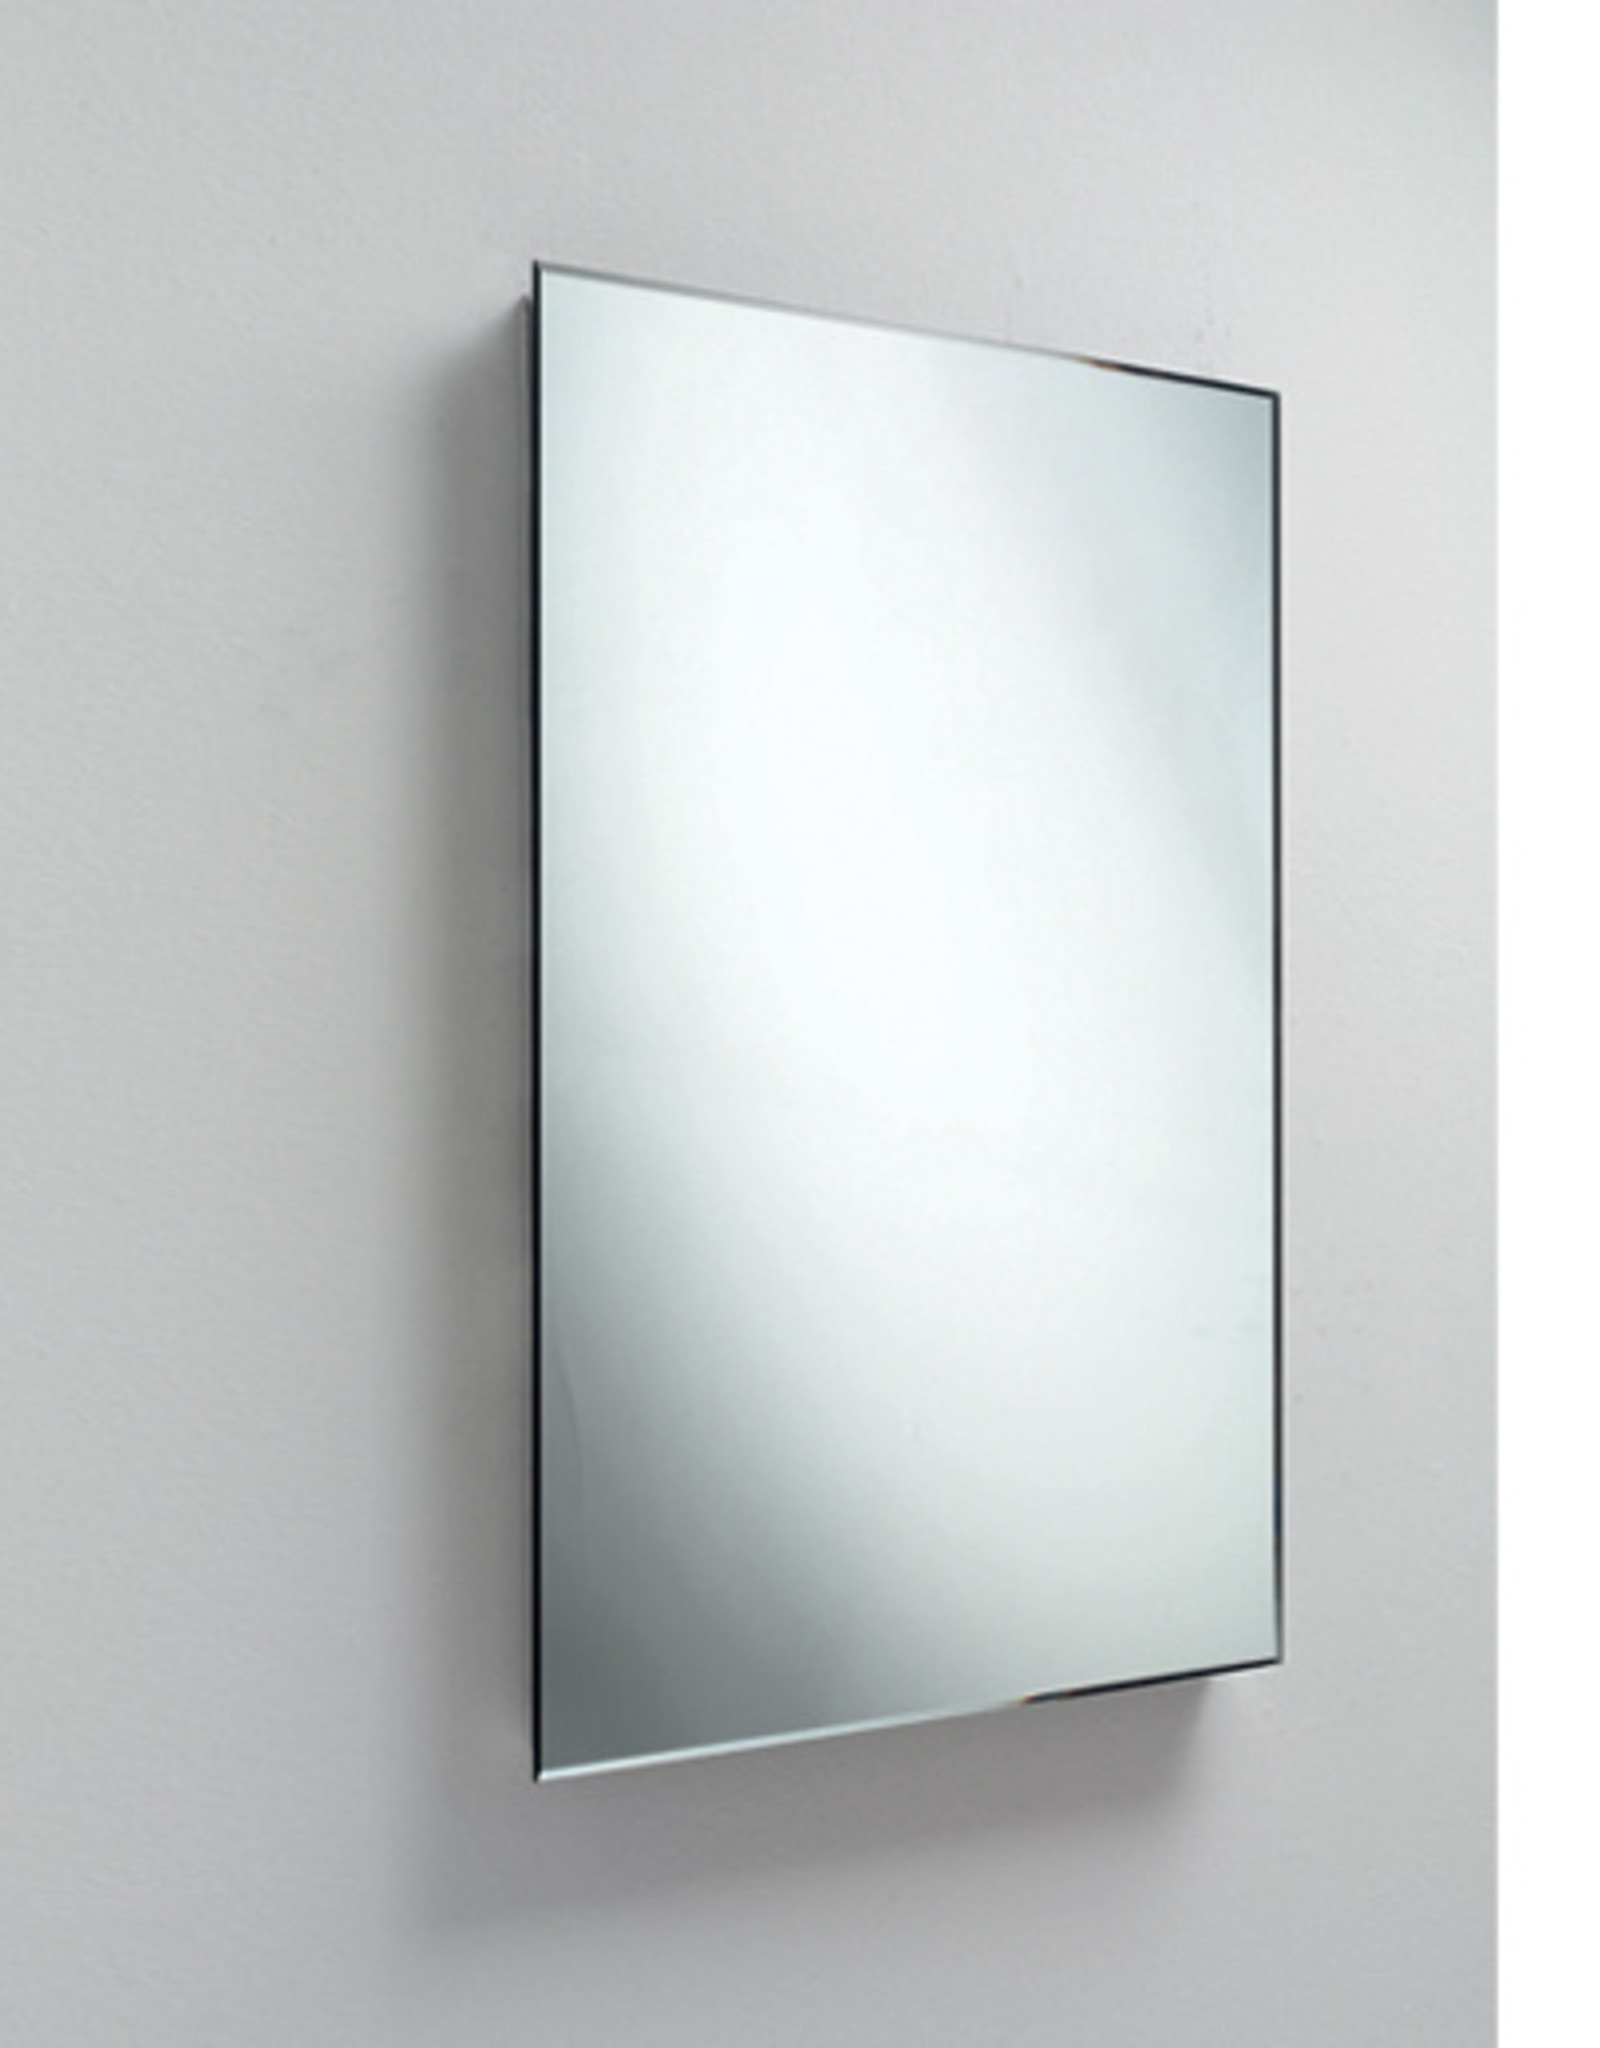 Speci mirror with bevel 60cm